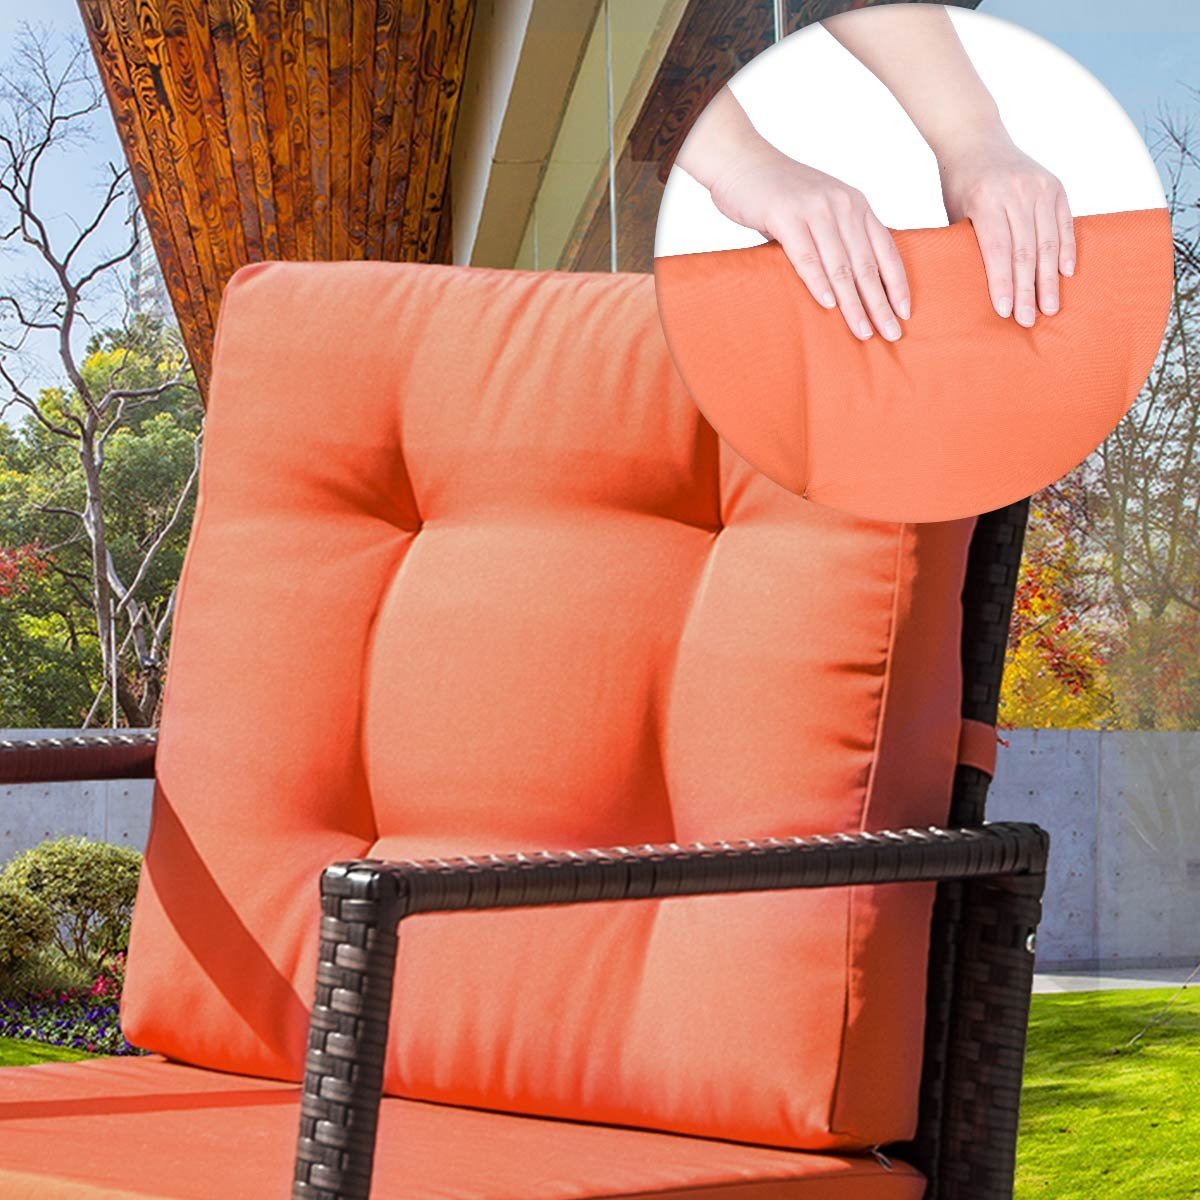 Merax Cushioned Rattan Rocker Chair Patio Glider Lounge Wicker Chair with Cushion(Orange Cushion) - image 2 of 5